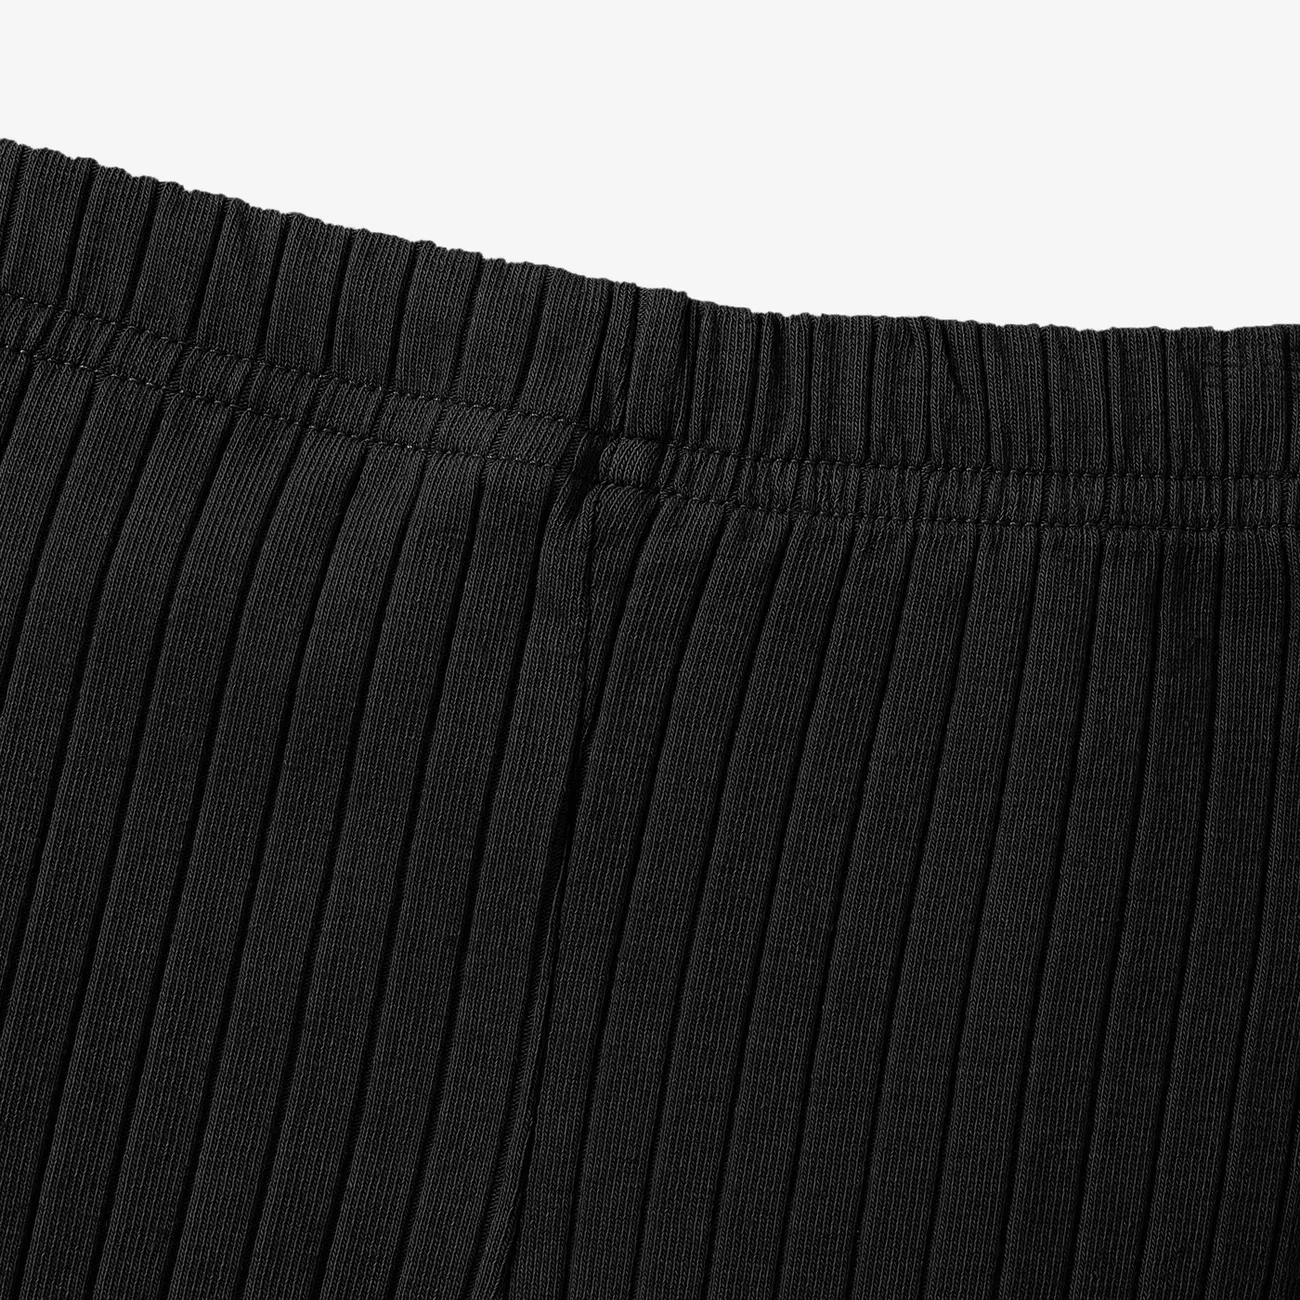 Baby Girl 95% Cotton Ribbed Solid Pants Leggings Black big image 1